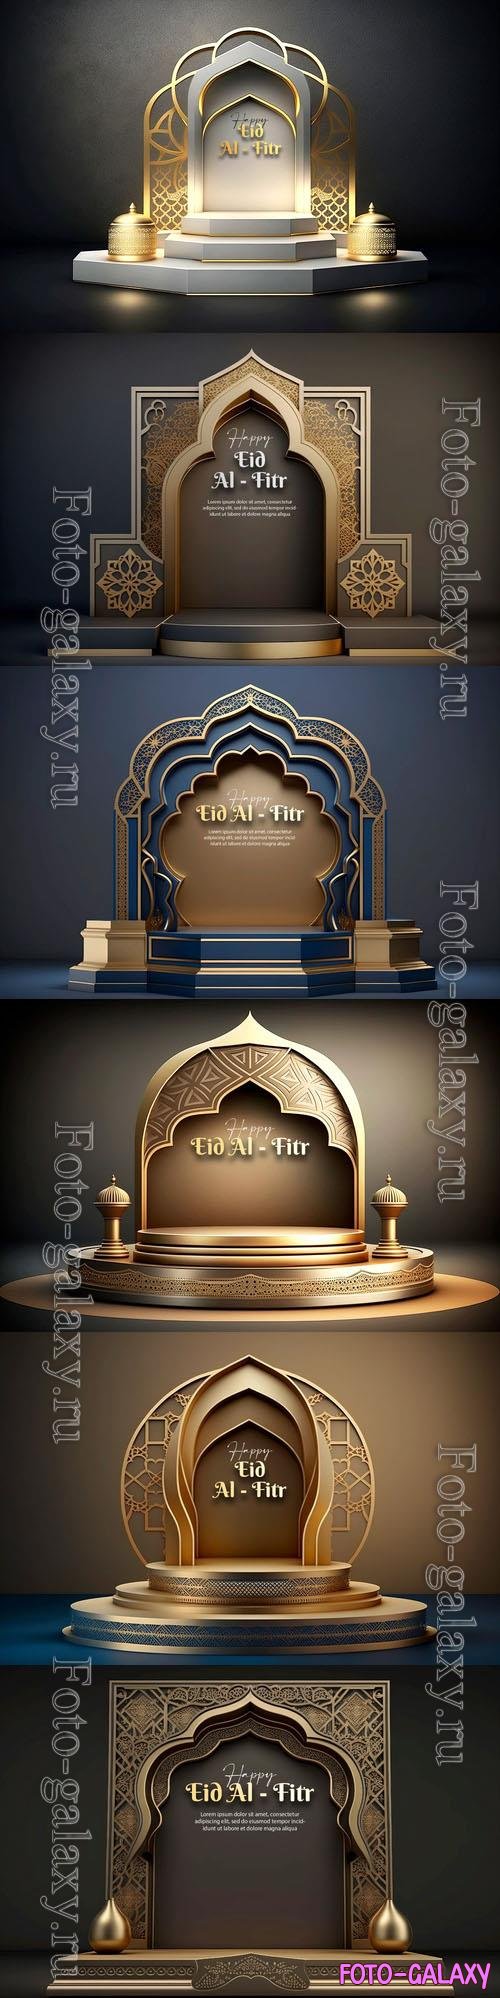 PSD luxurious podium in islamic style happy eid alfitr